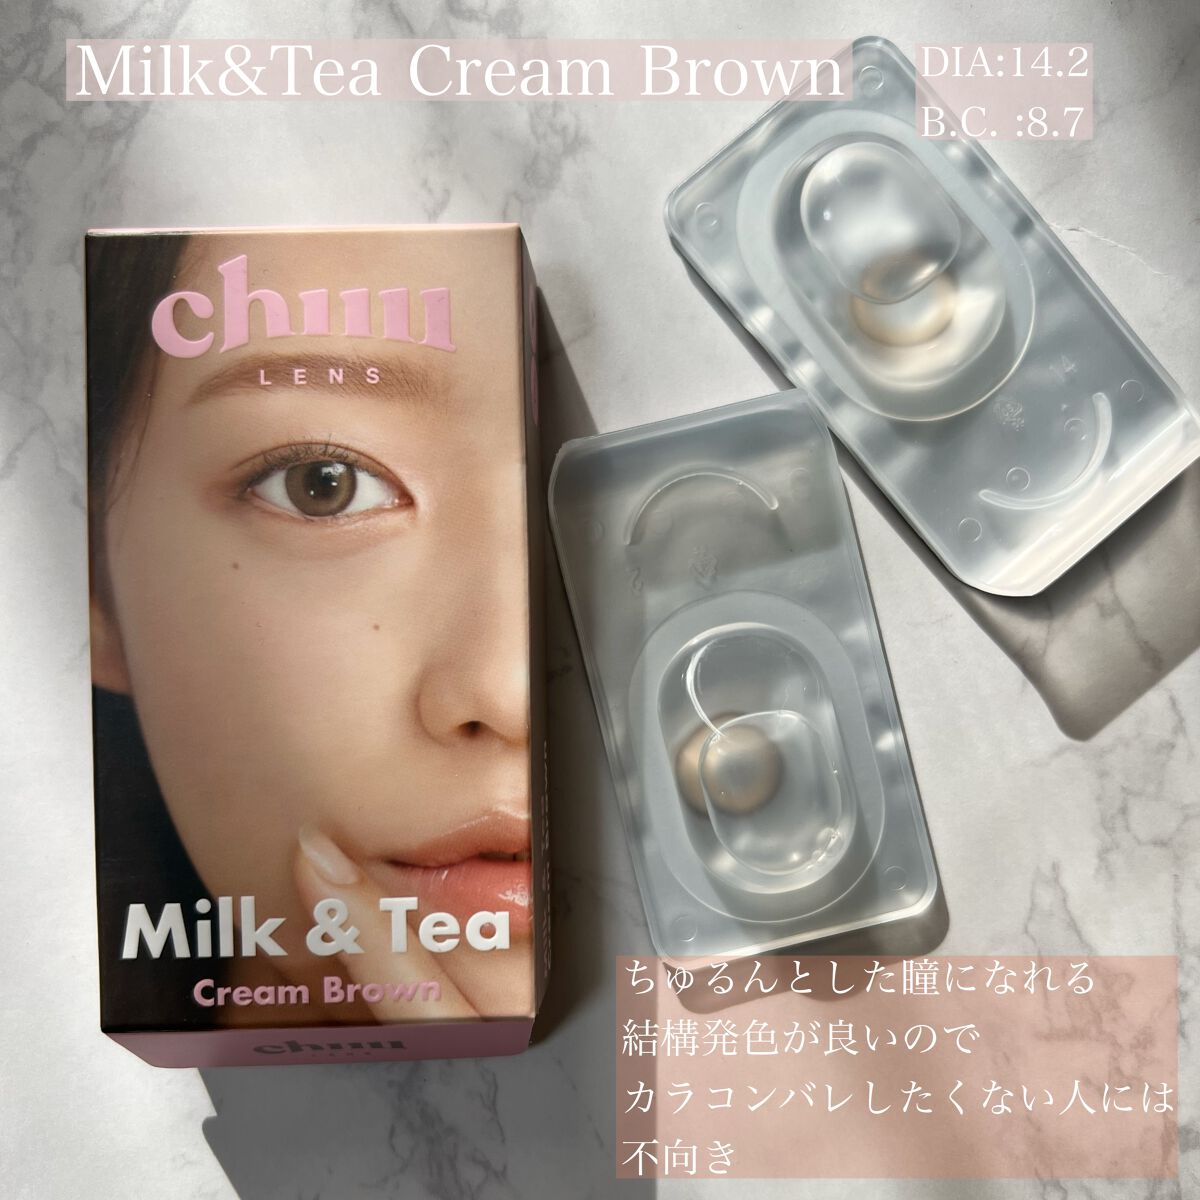 chuu LENSのカラーコンタクトレンズ Smile Cake＆Milk&Teaを使った